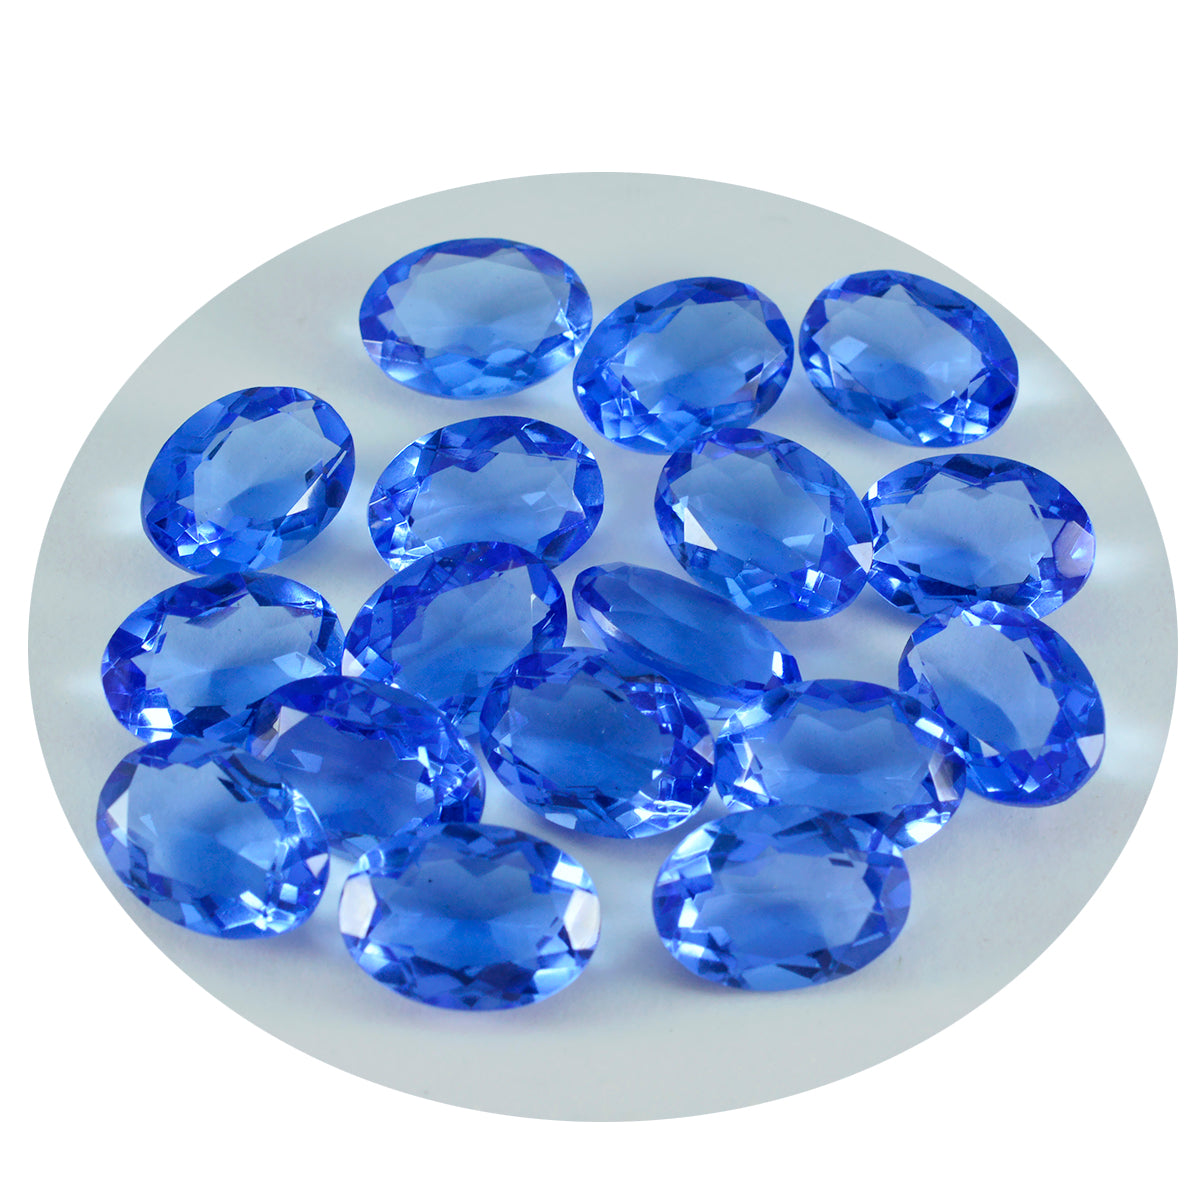 Riyogems 1PC Blue Sapphire CZ Faceted 7x9 mm Oval Shape A1 Quality Gems